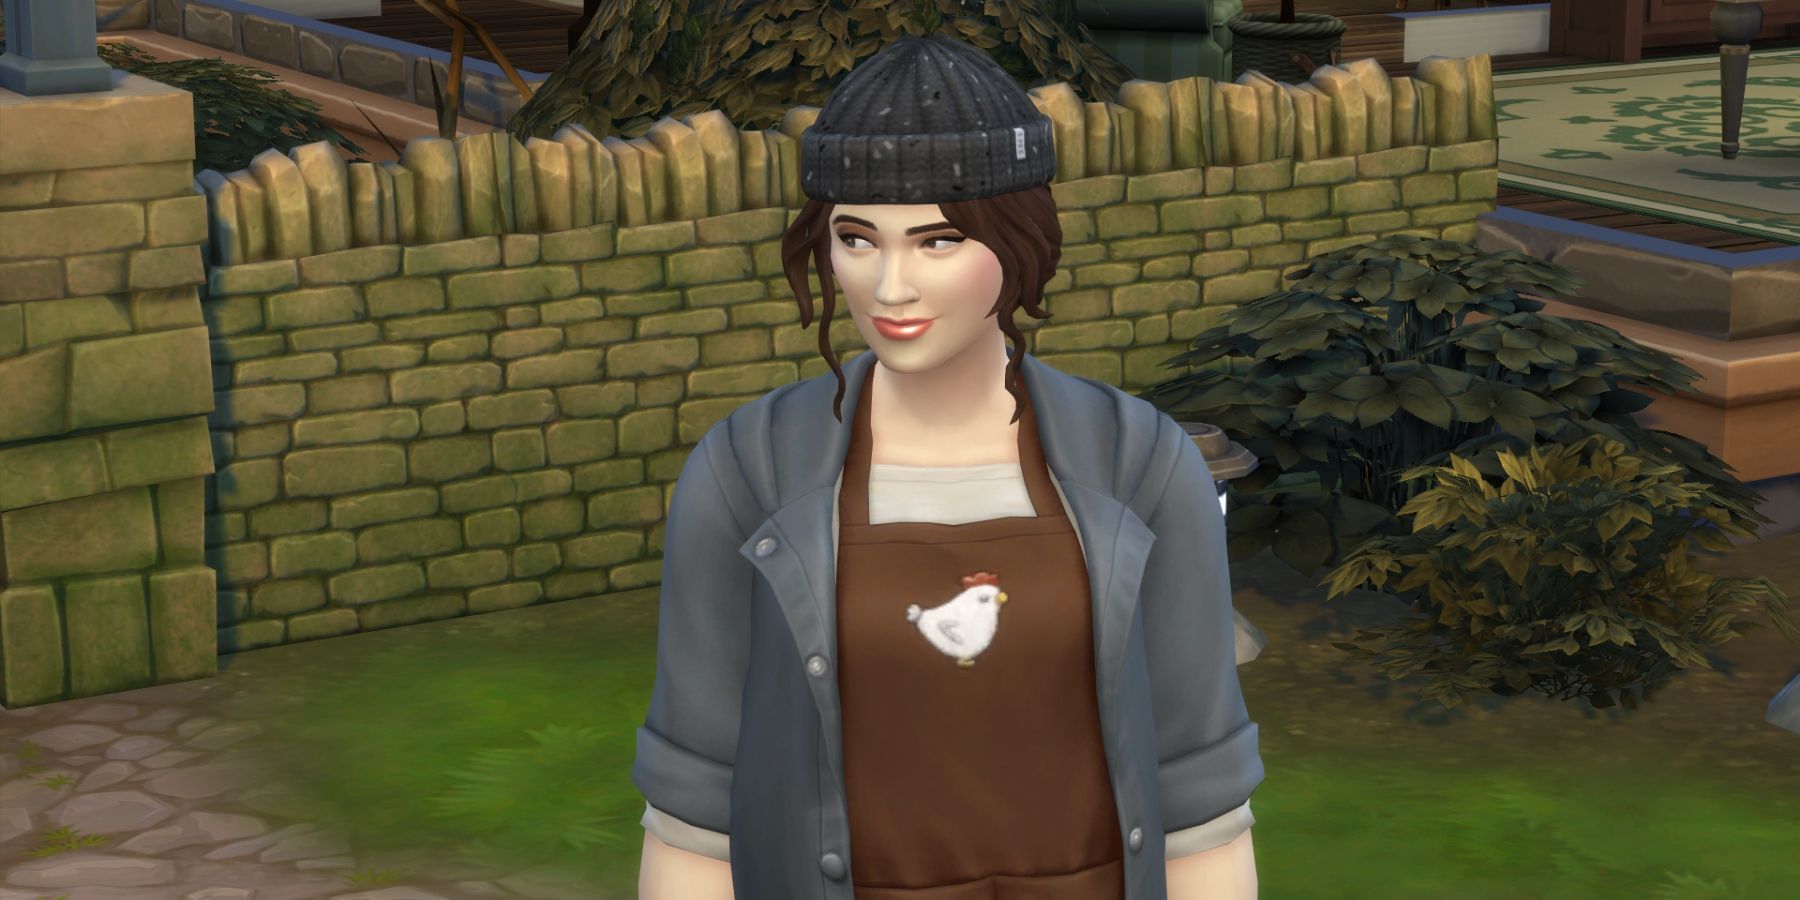 Kim goldbloom in the Sims 4